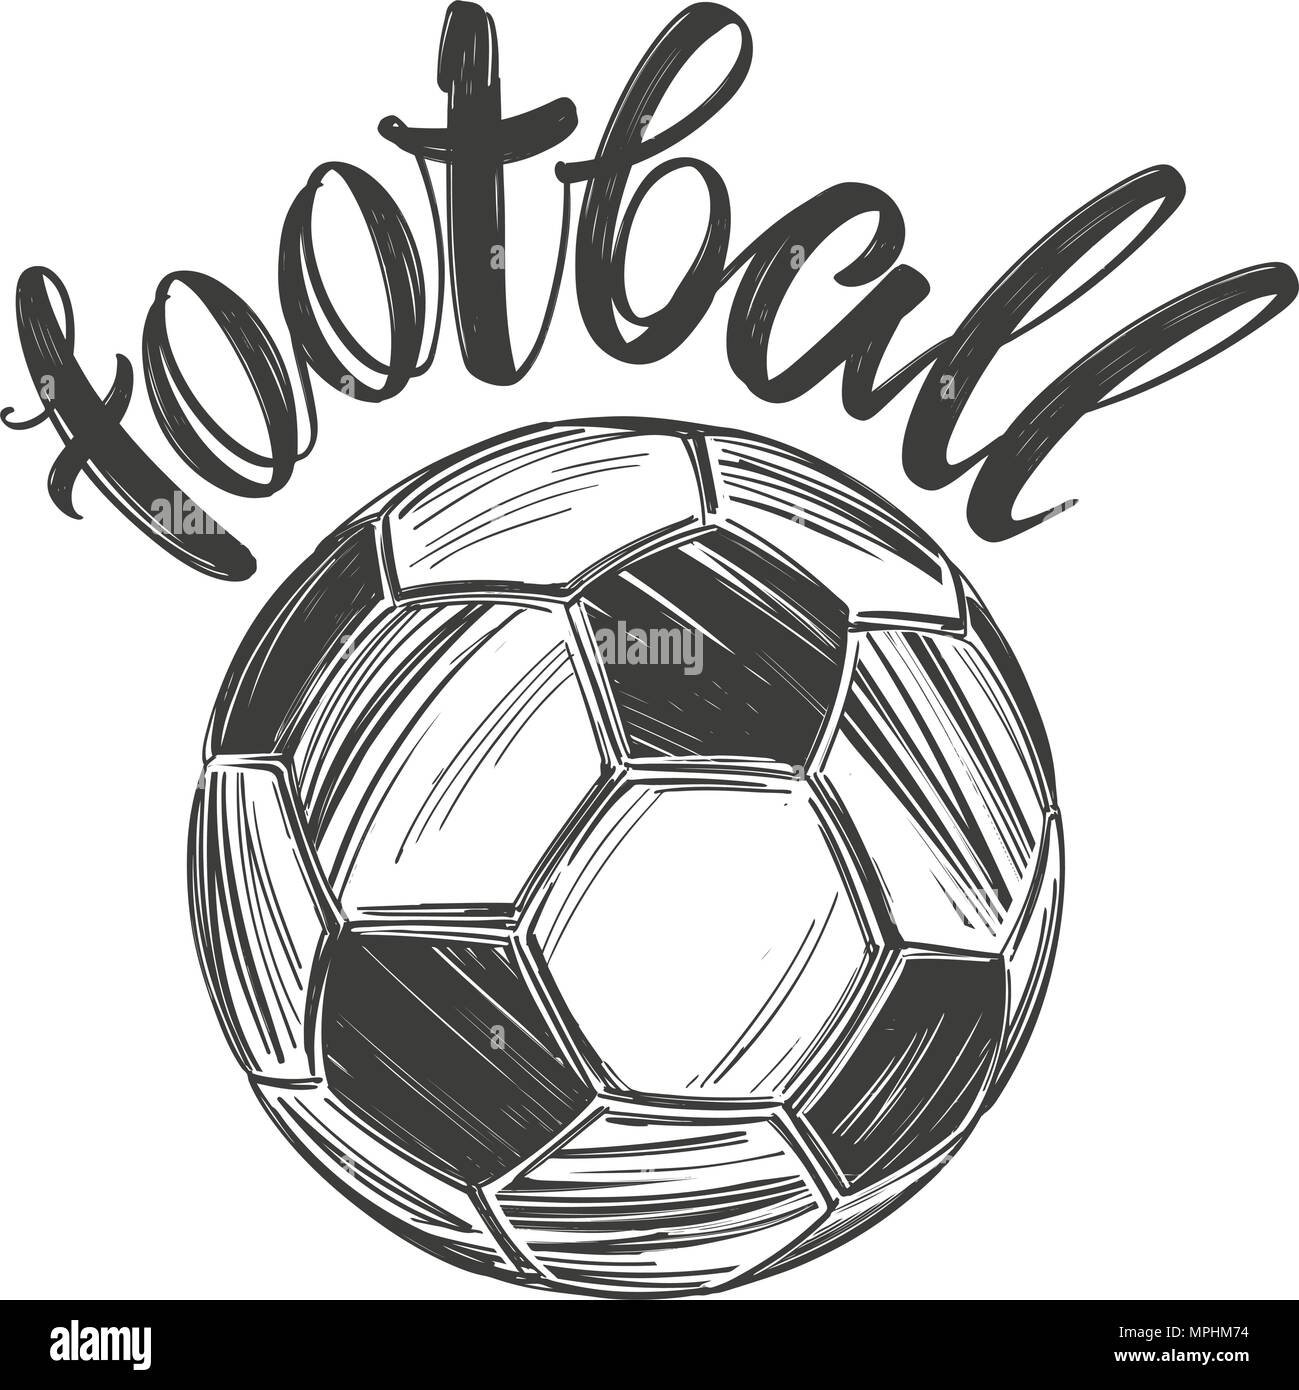 Football Sketch